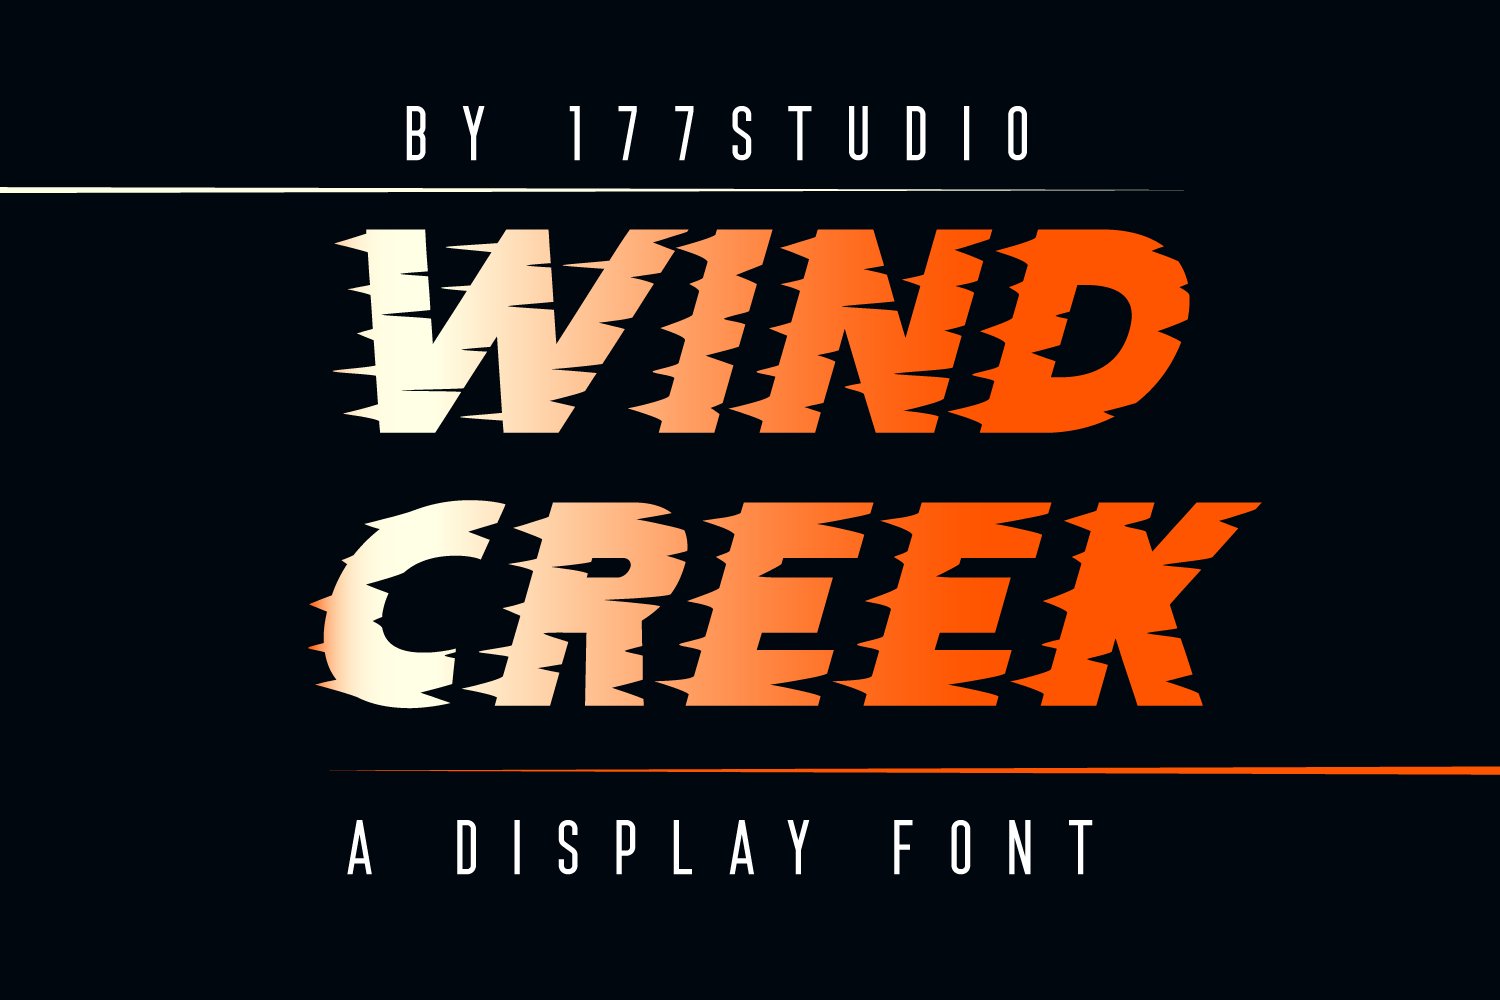 WIND CREEK Font cover image.